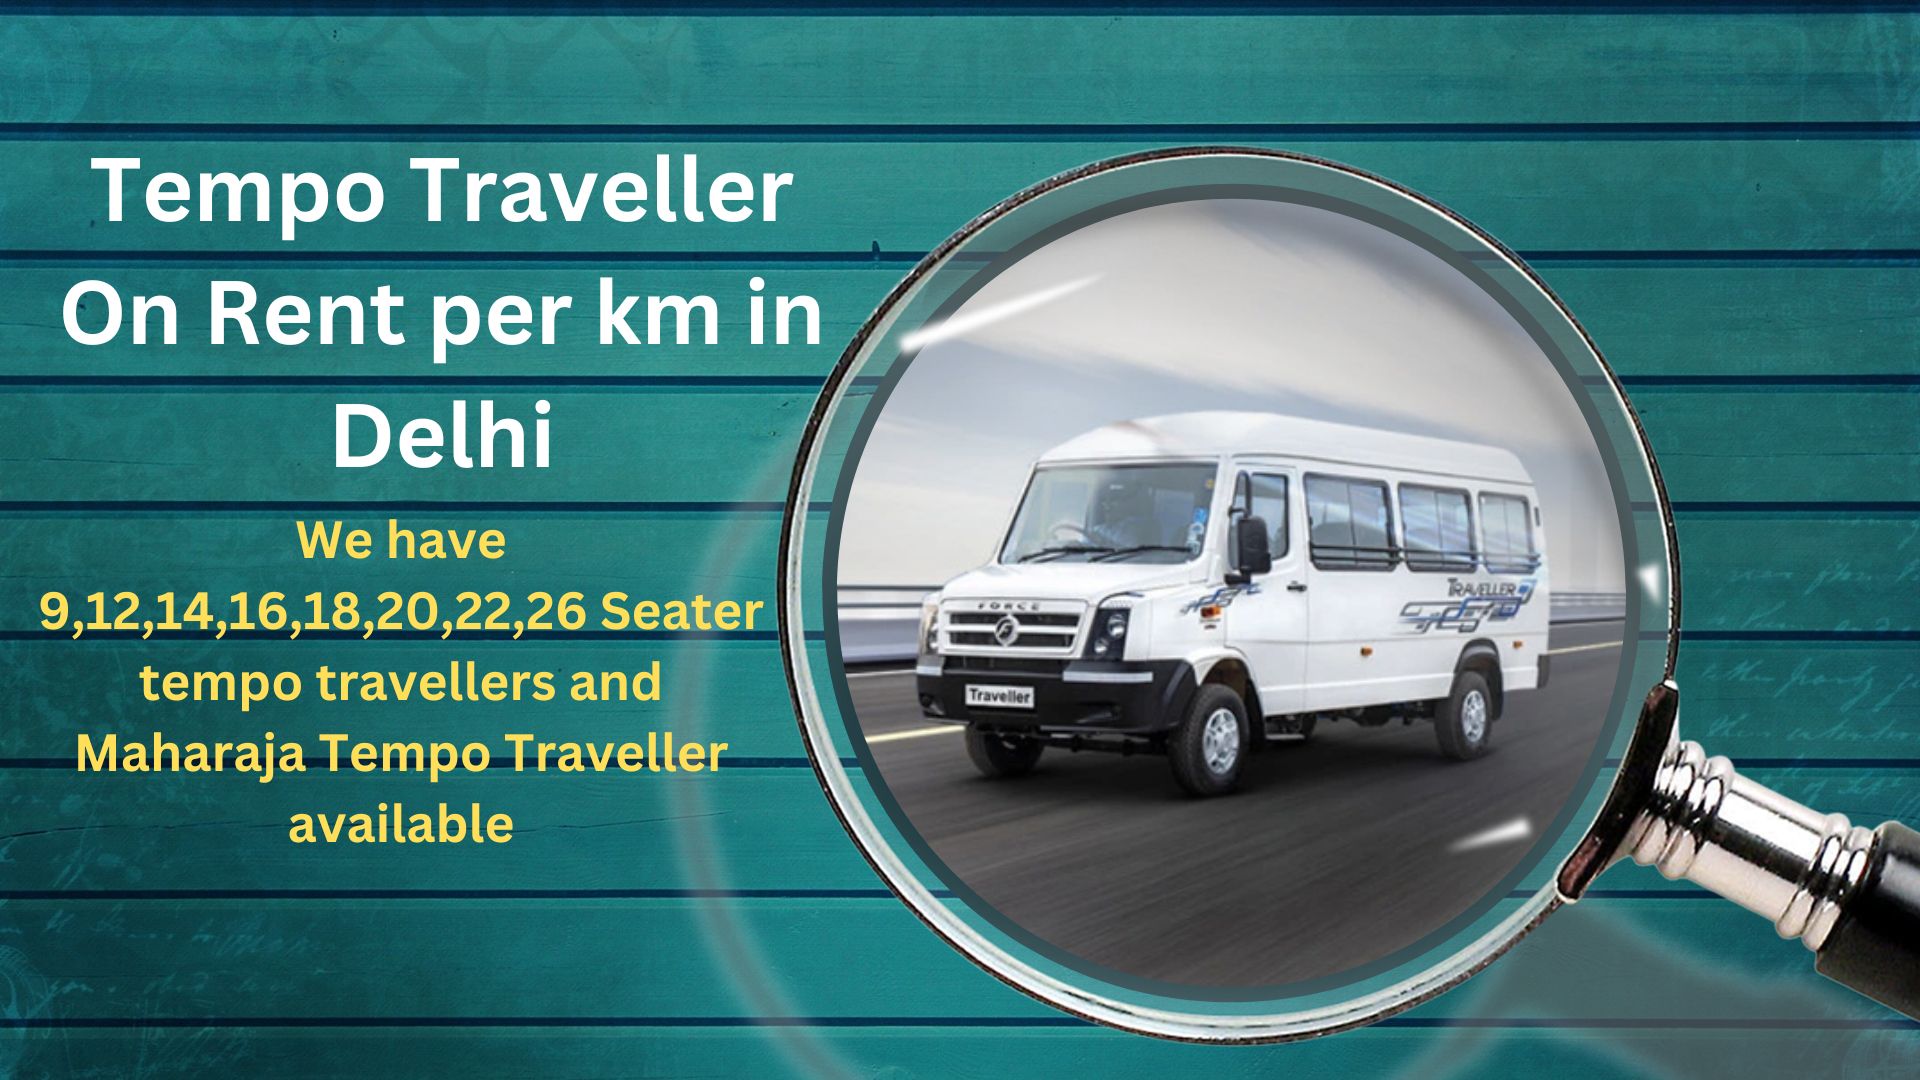 What is the Cost of Tempo Traveller per km in Delhi